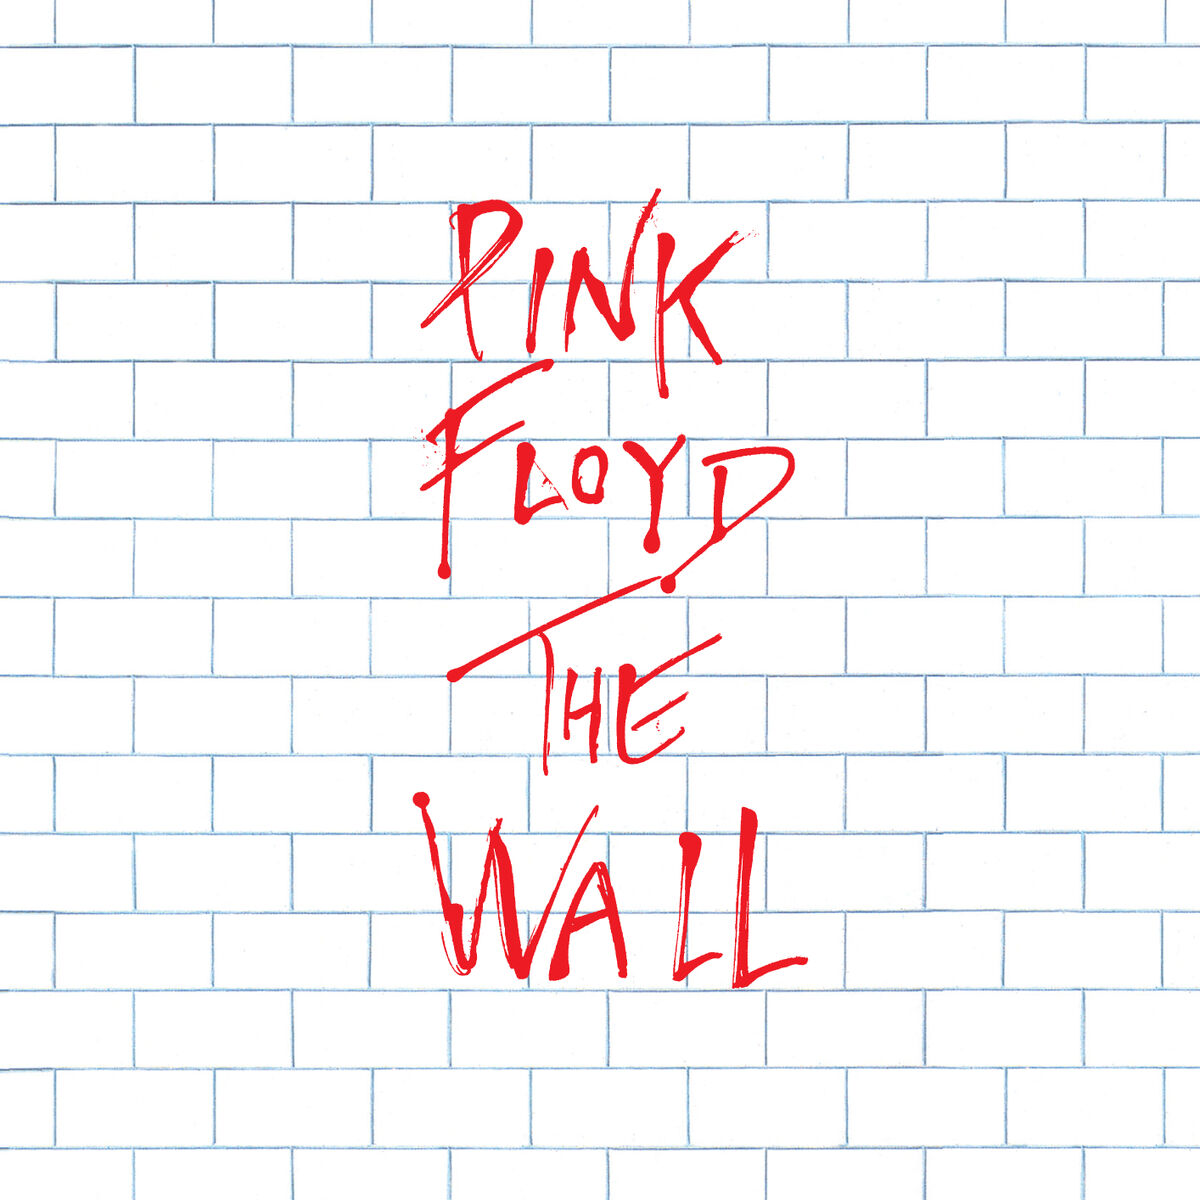 Pink Floyd - Wikipedia